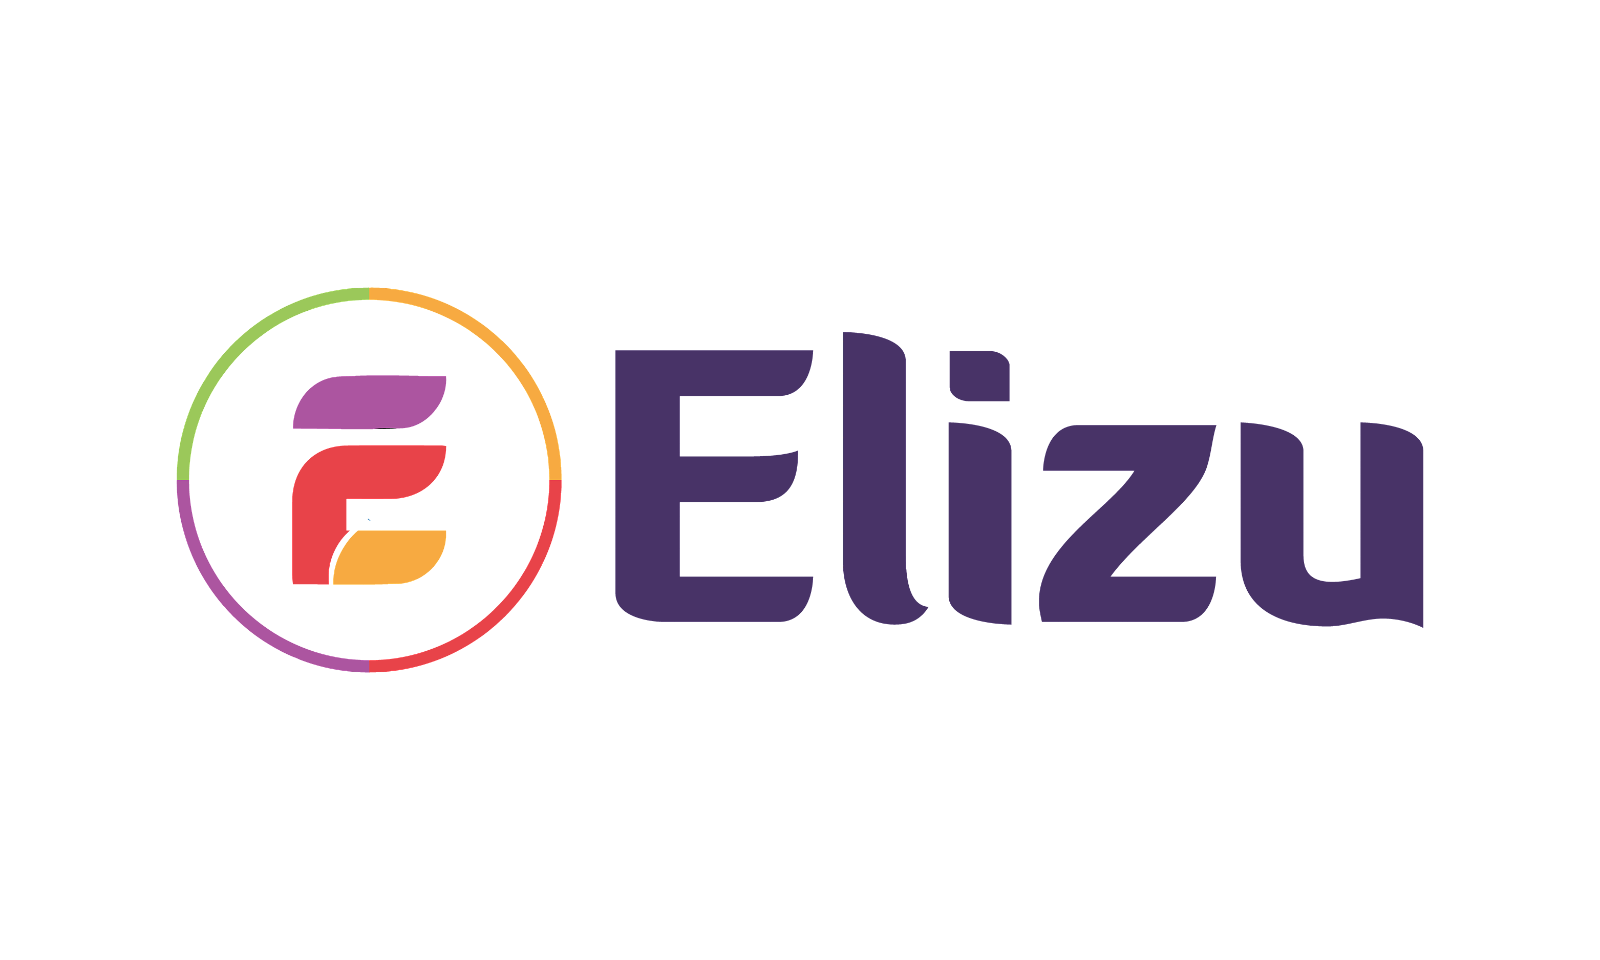 Elizu.com - Creative brandable domain for sale